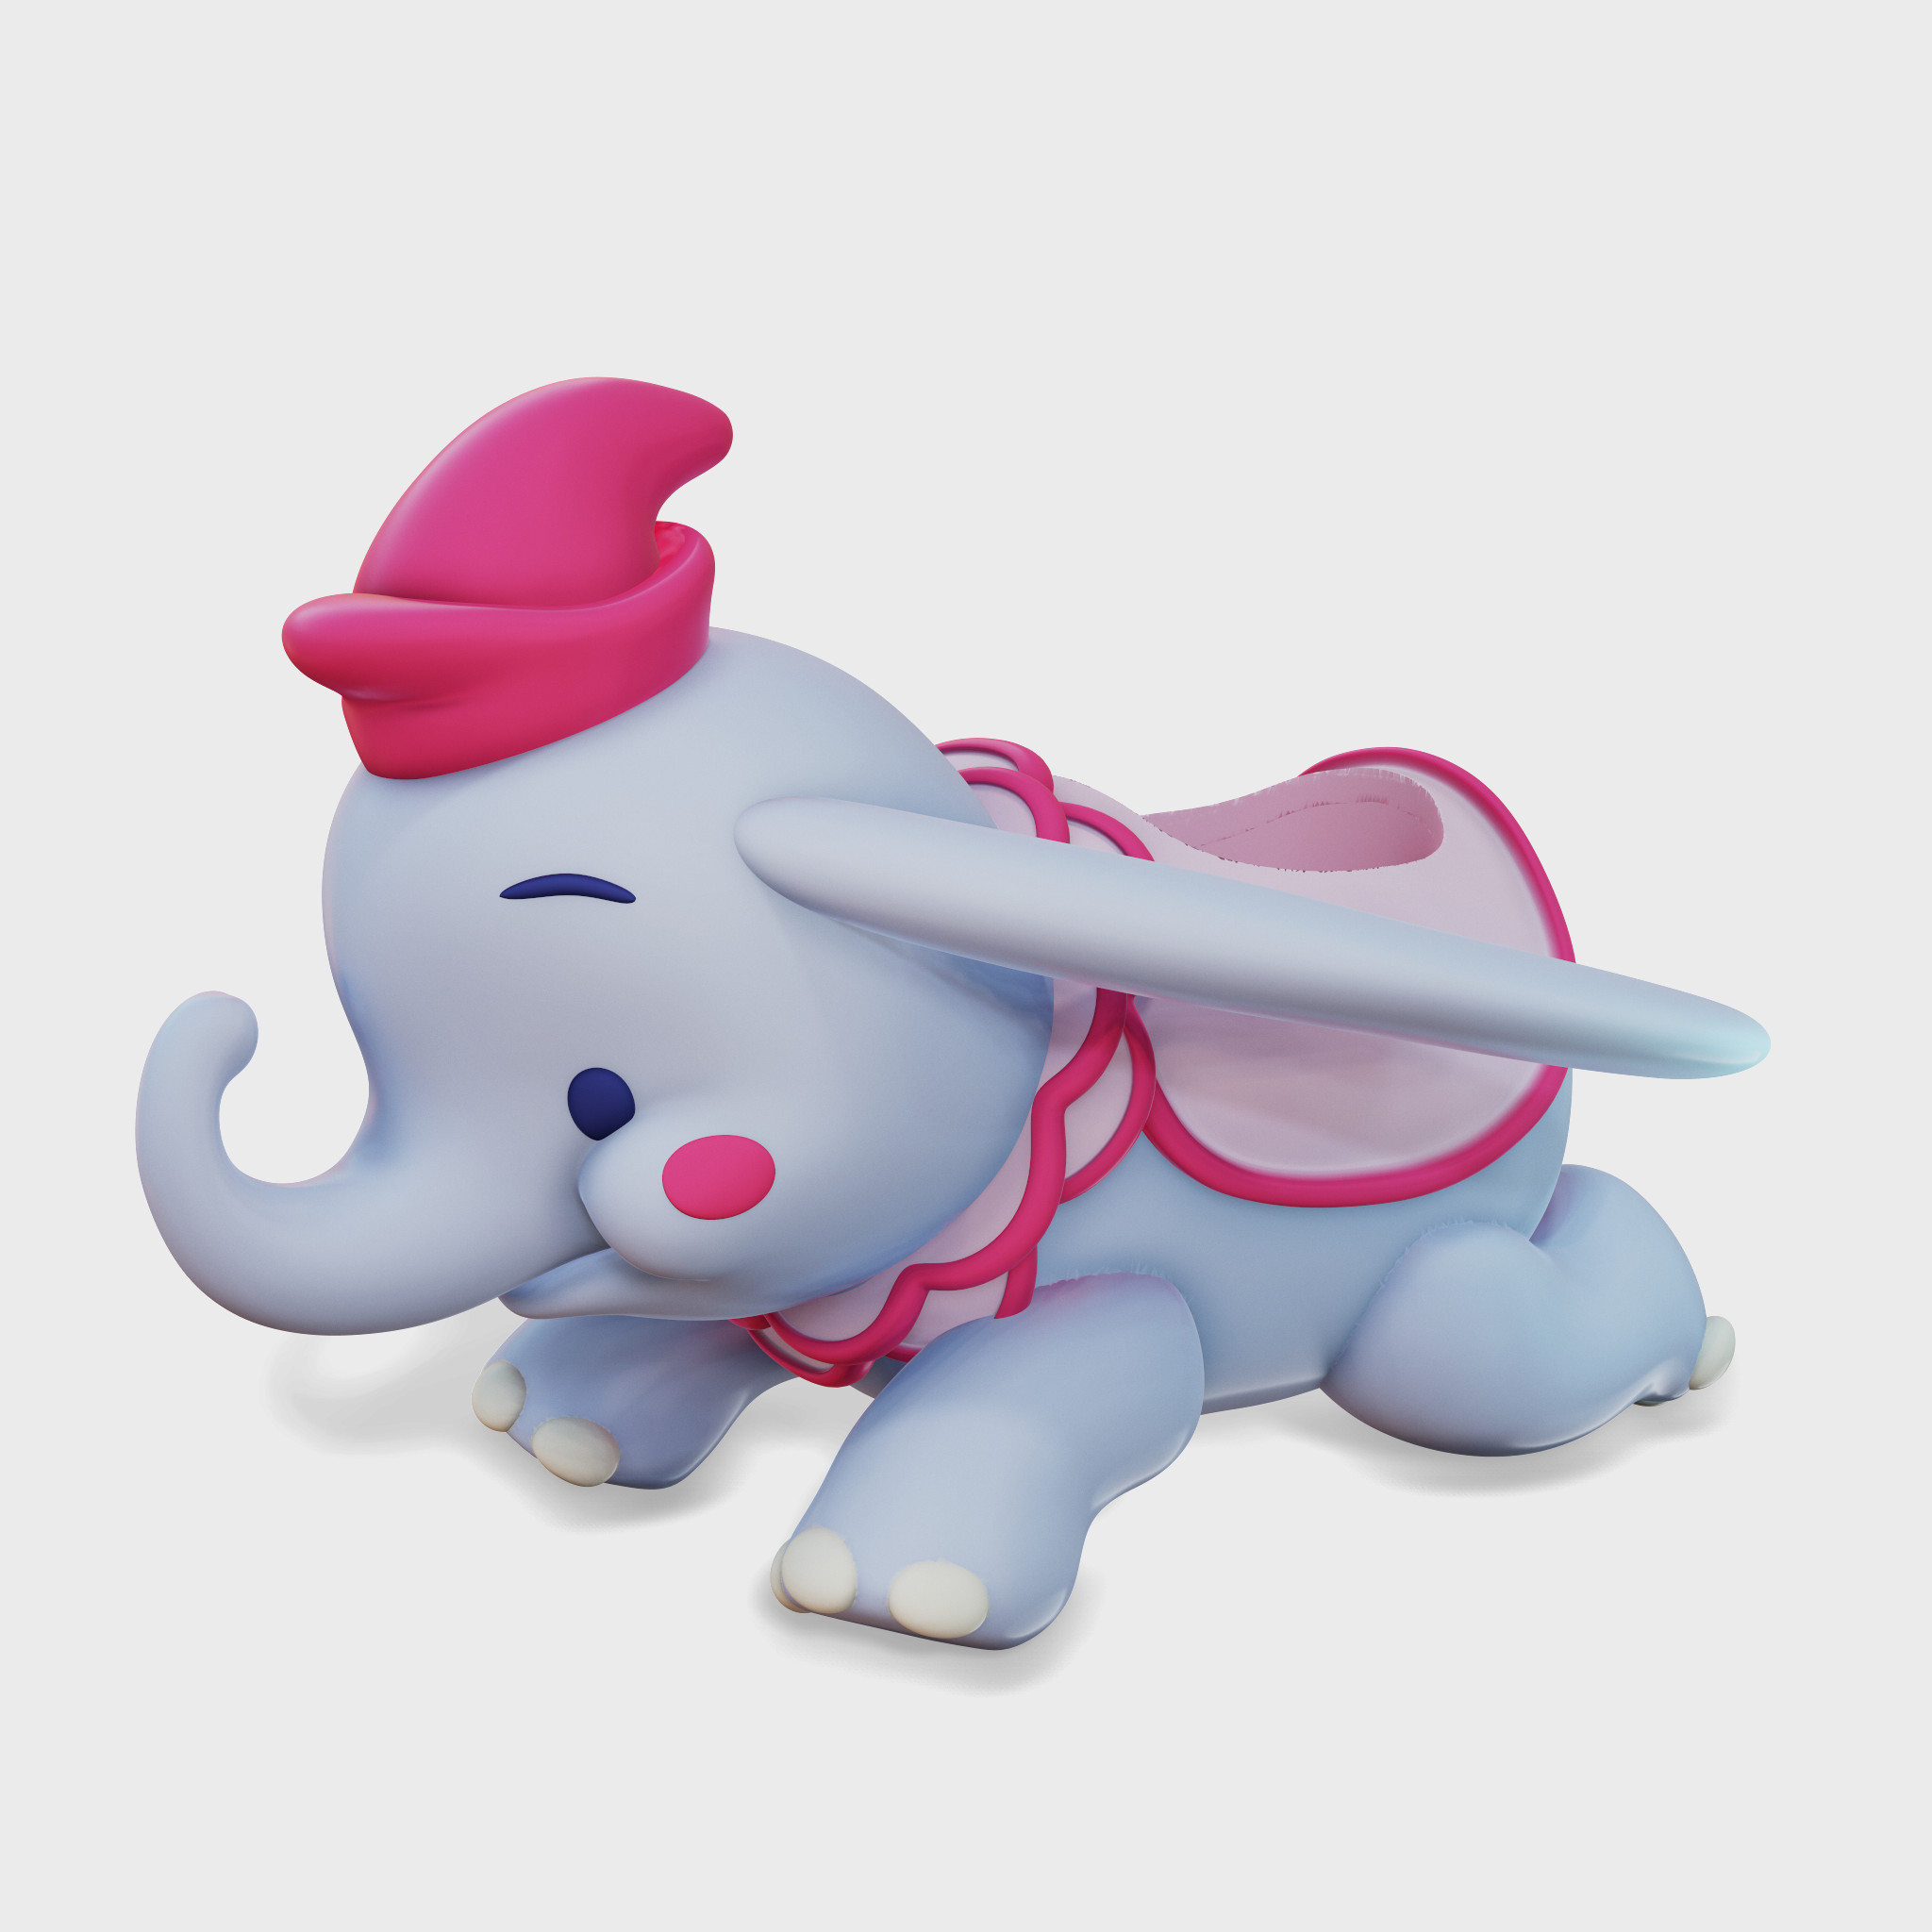 Dumbo Succulent Planter - Render of 3D model